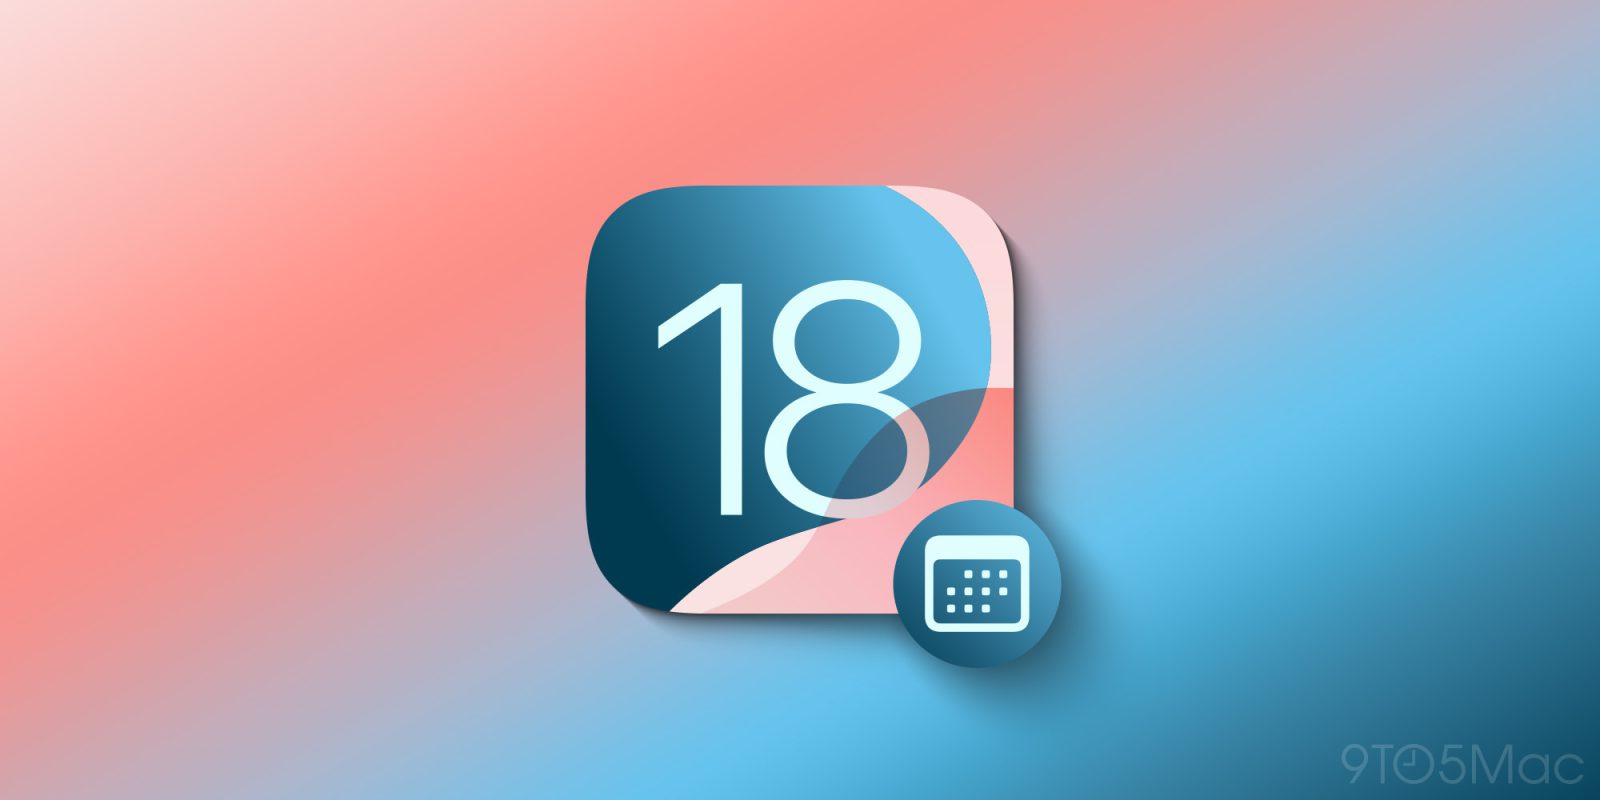 When will Apple release the iOS 18 public beta?